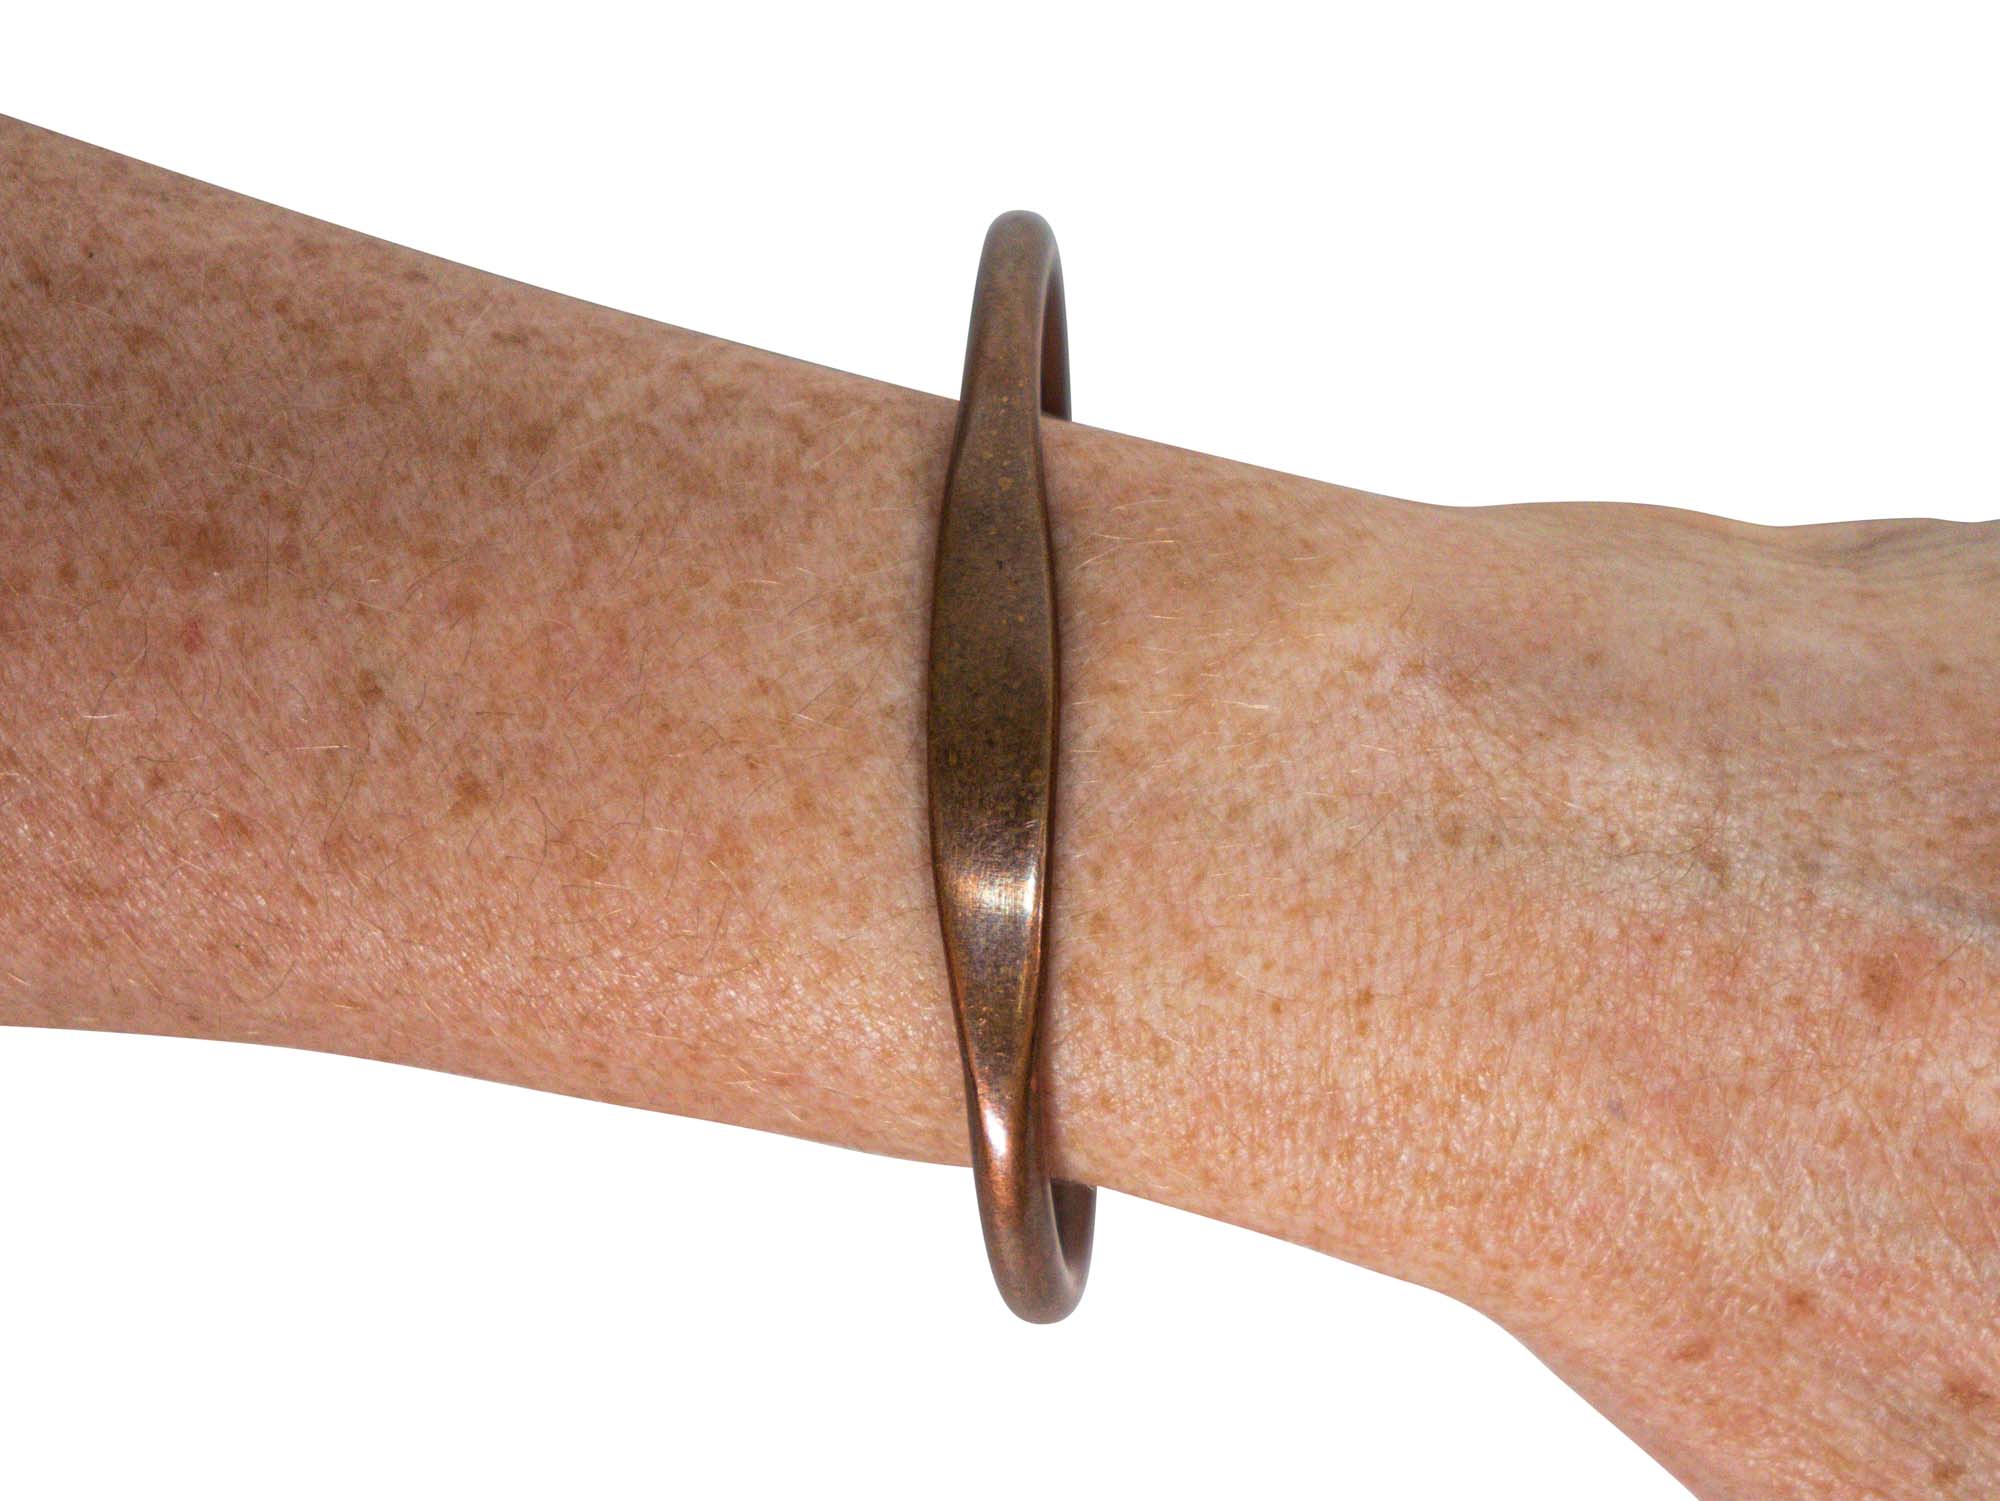 DIY Copper Bracelet | Easy! - YouTube